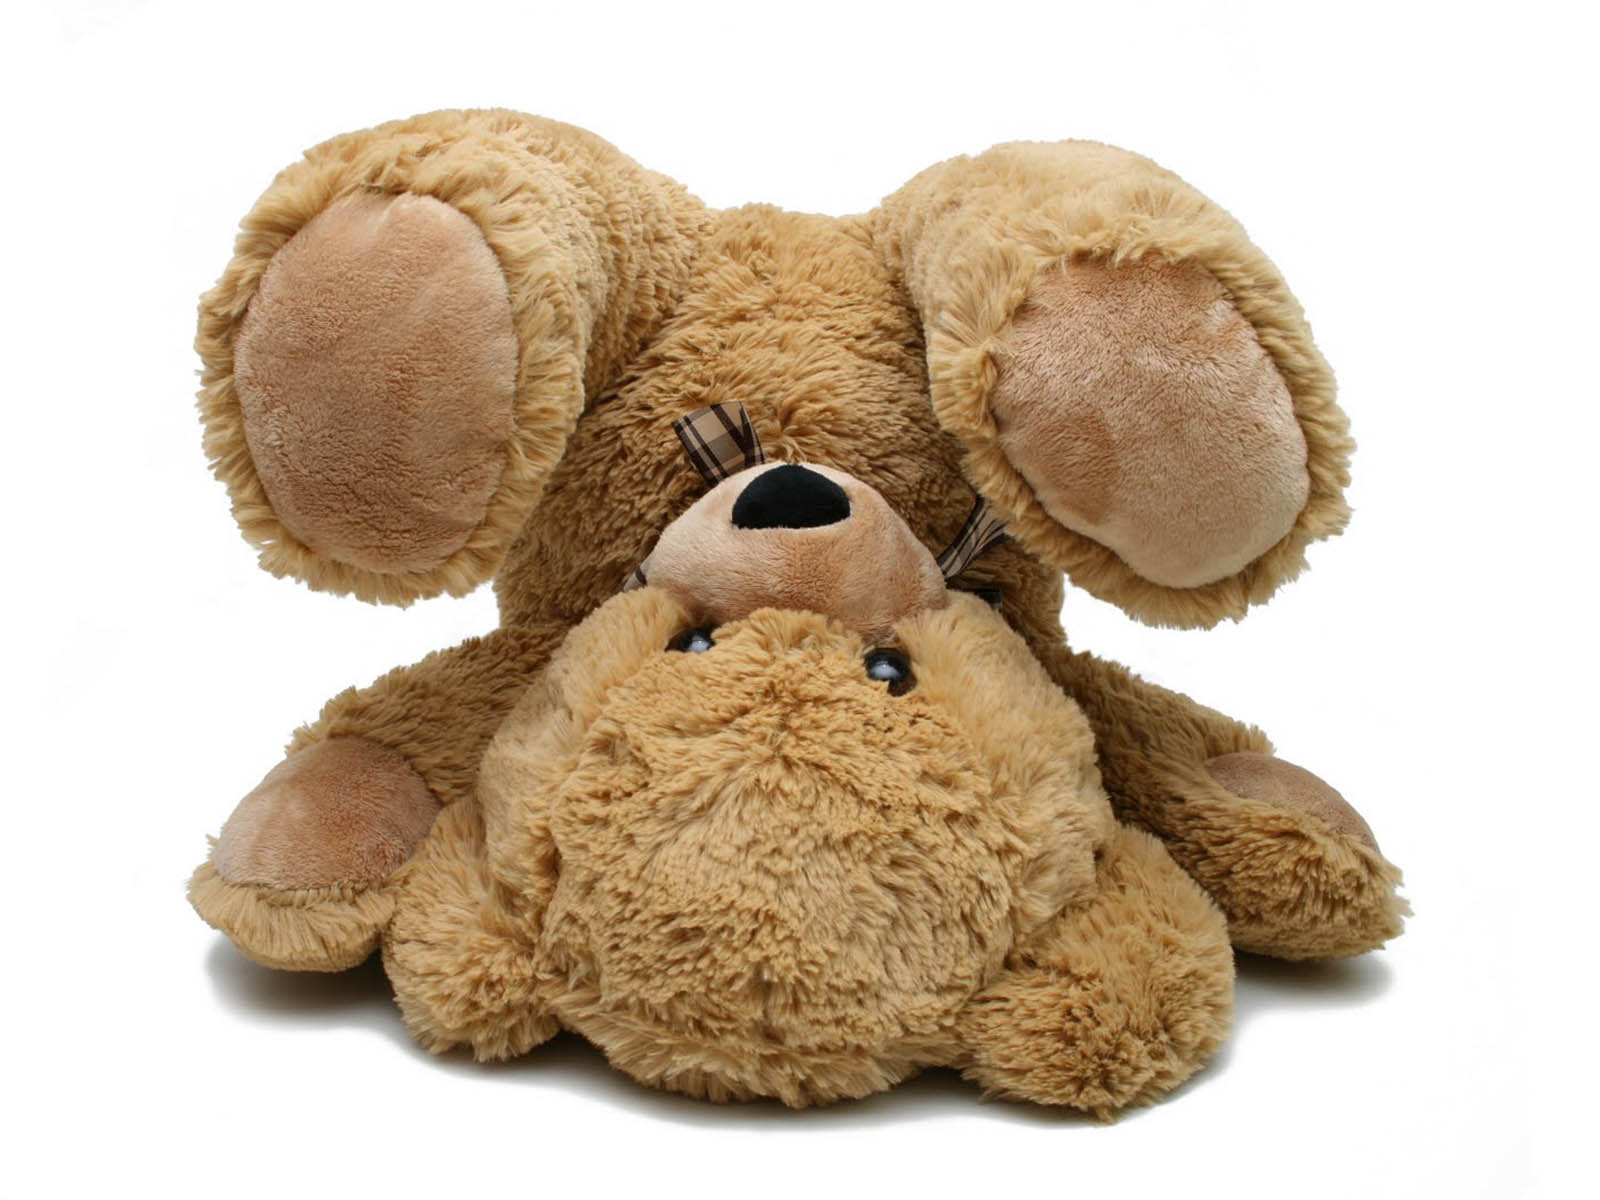 teddy bear image wallpaper,stuffed toy,plush,toy,beige,teddy bear